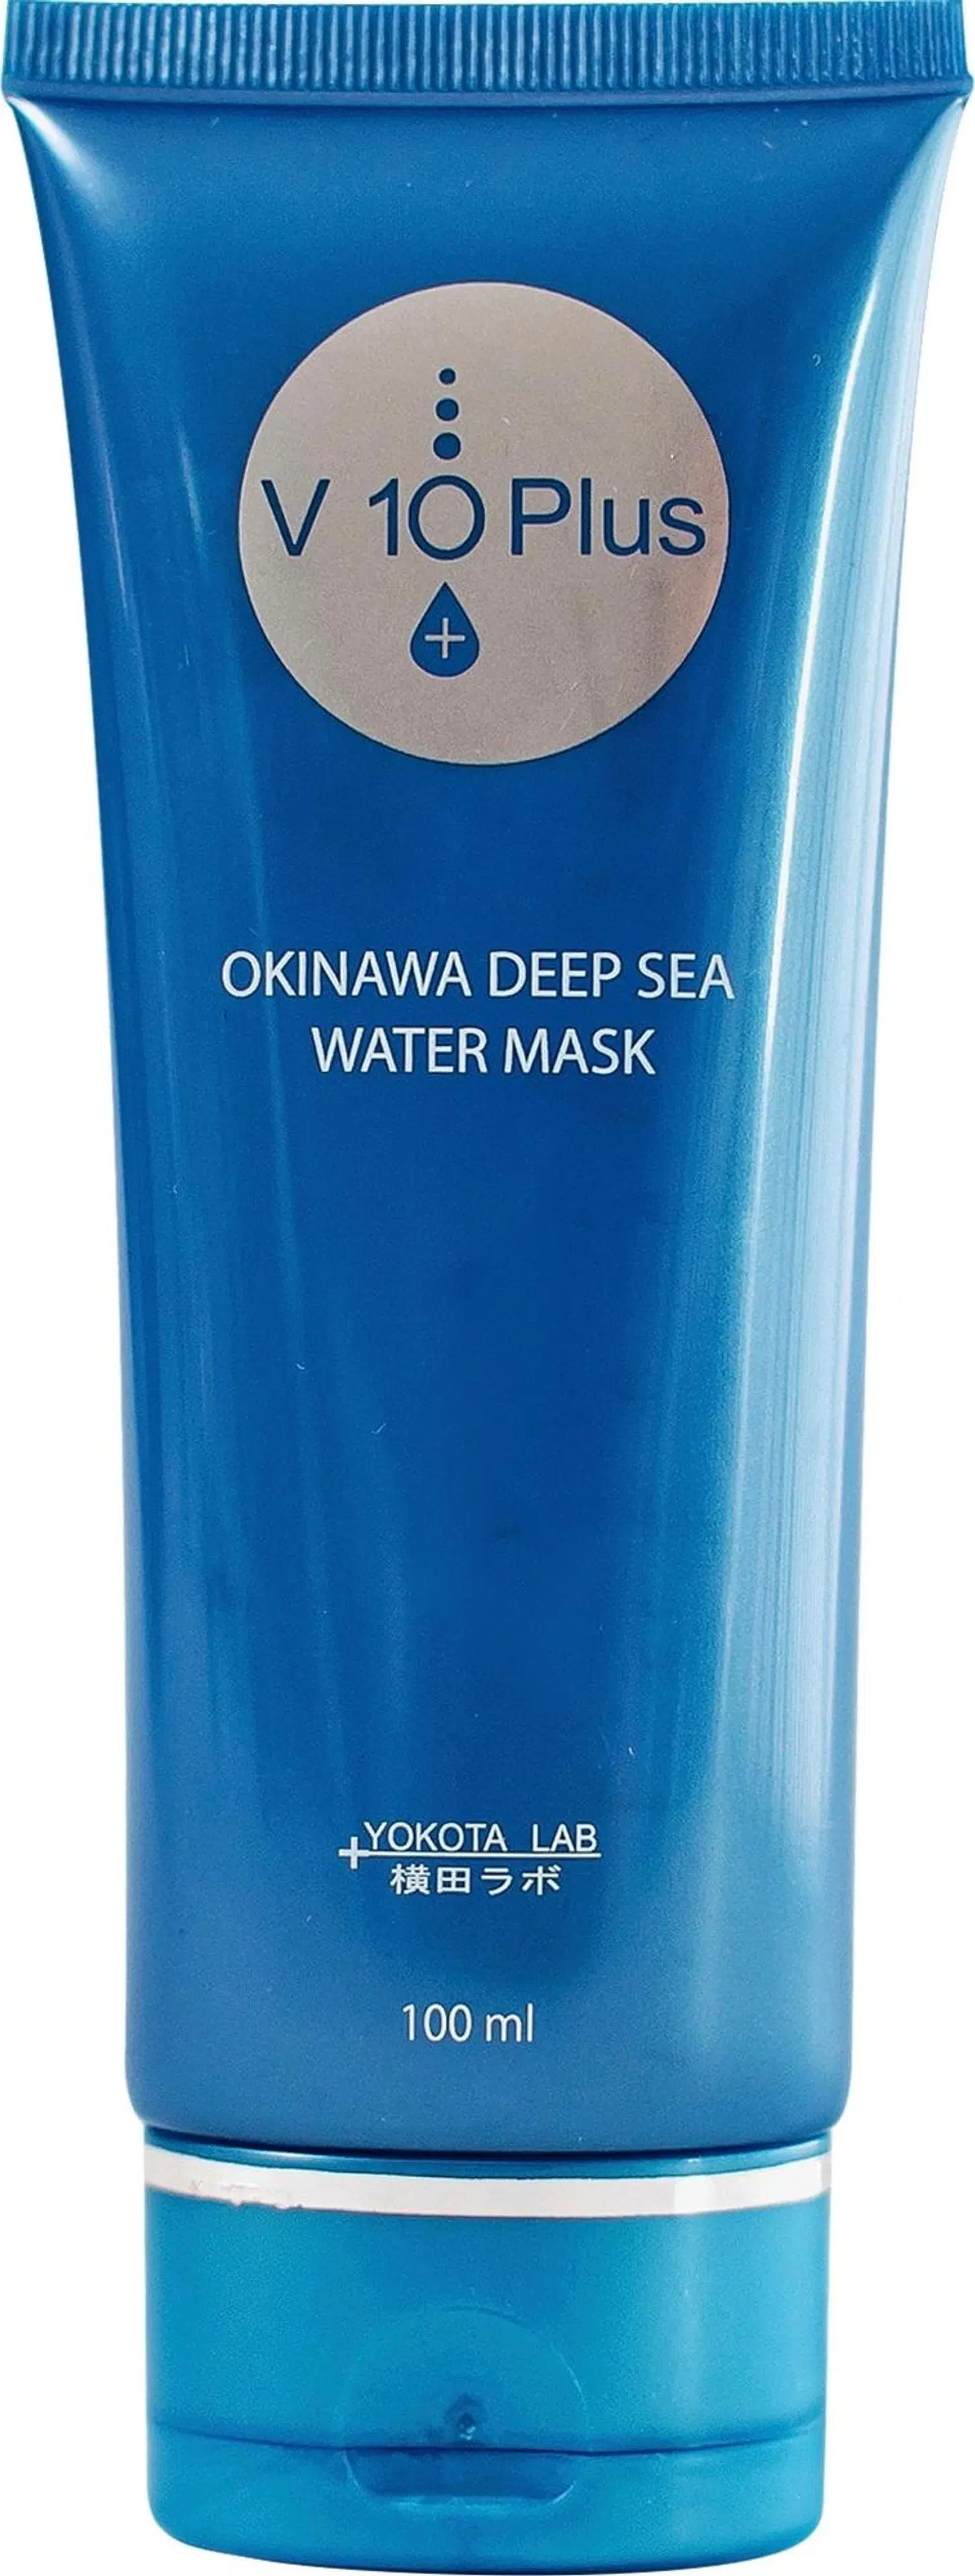 V 10 Plus Okinawa Deep Sea Water Mask kasvonaamio 100 ml